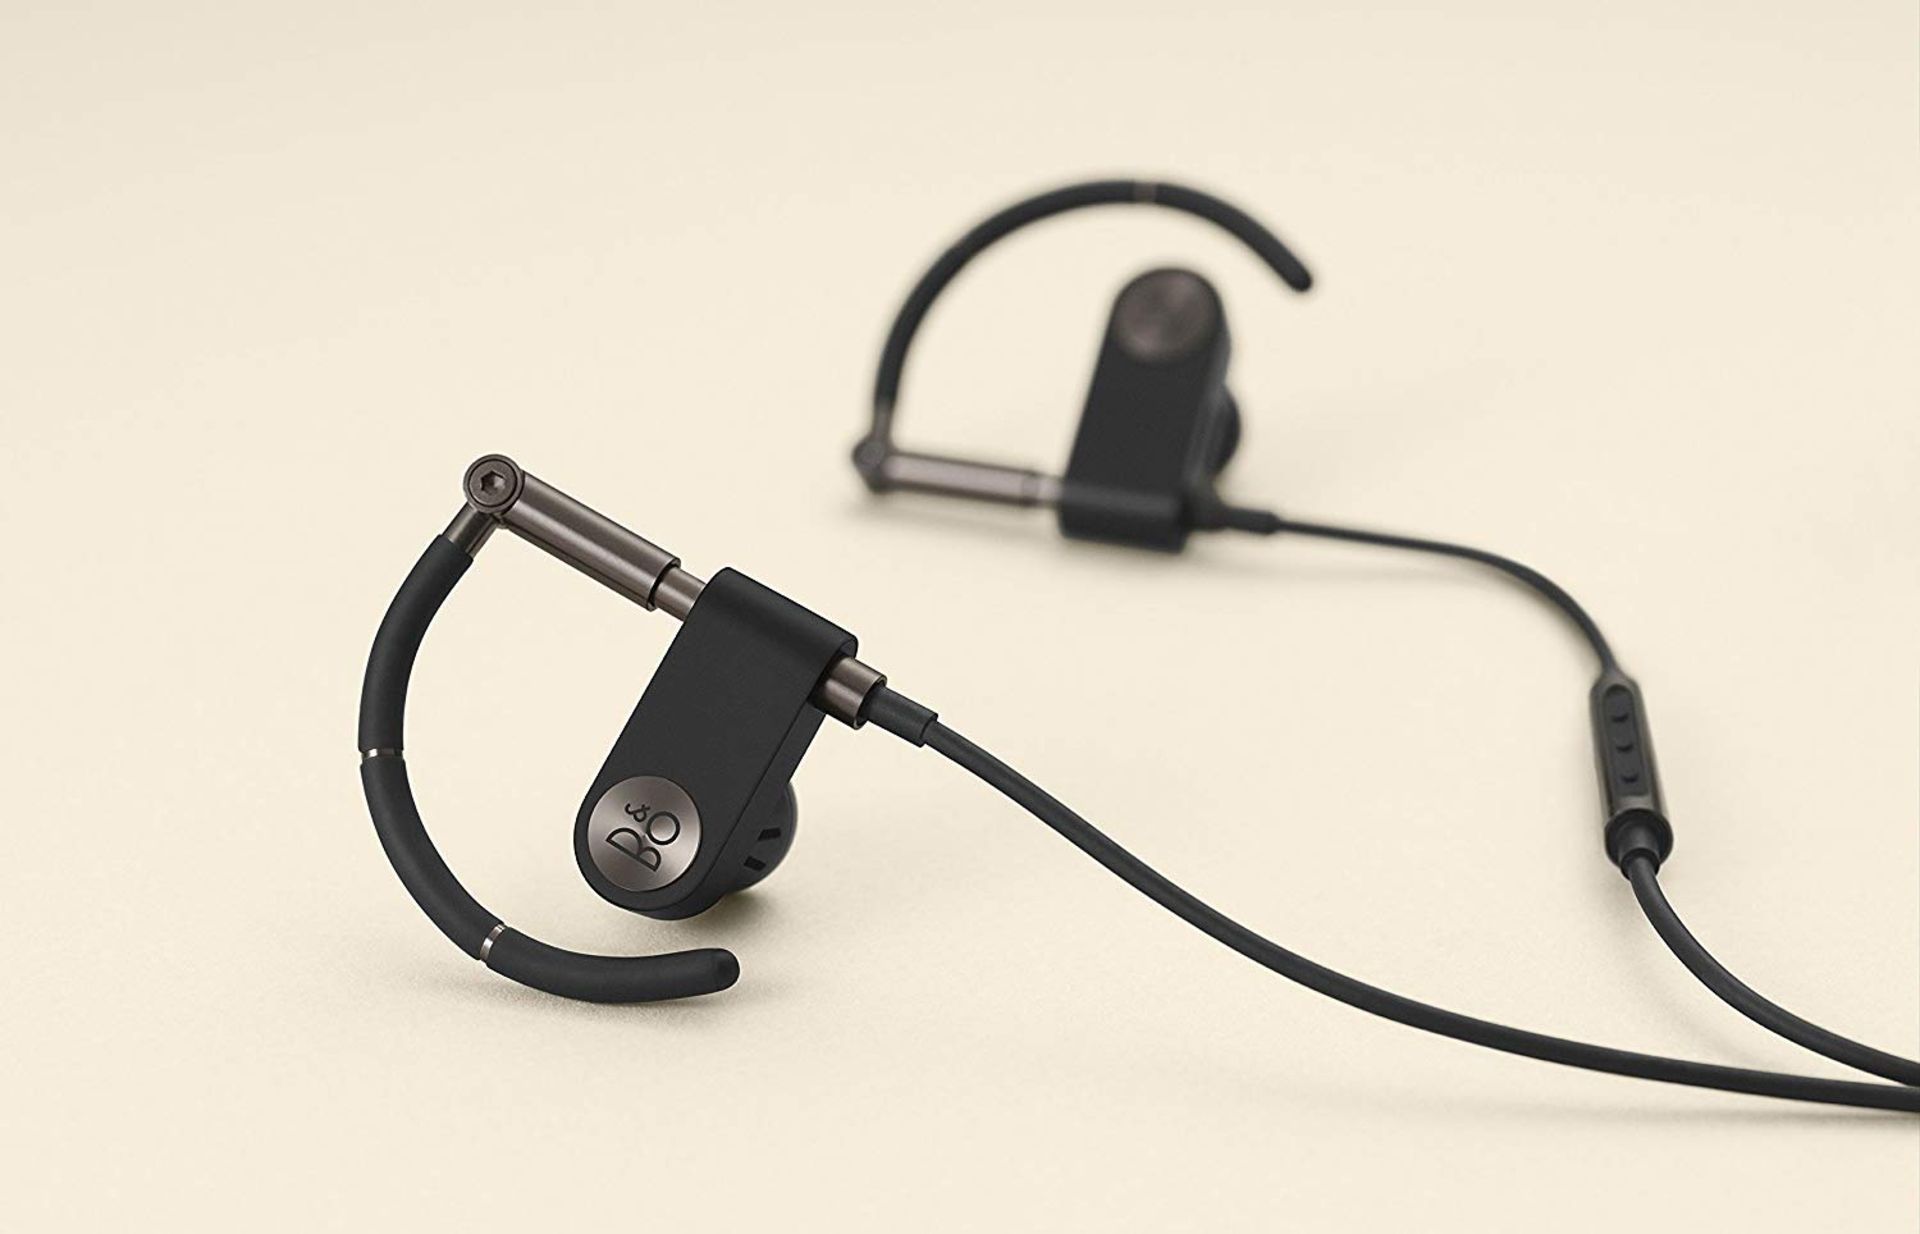 V Brand New Bang & Olufsen Premium Wireless Earset Earphones - Graphite Brown RRP £275.00 - Brand - Image 2 of 3